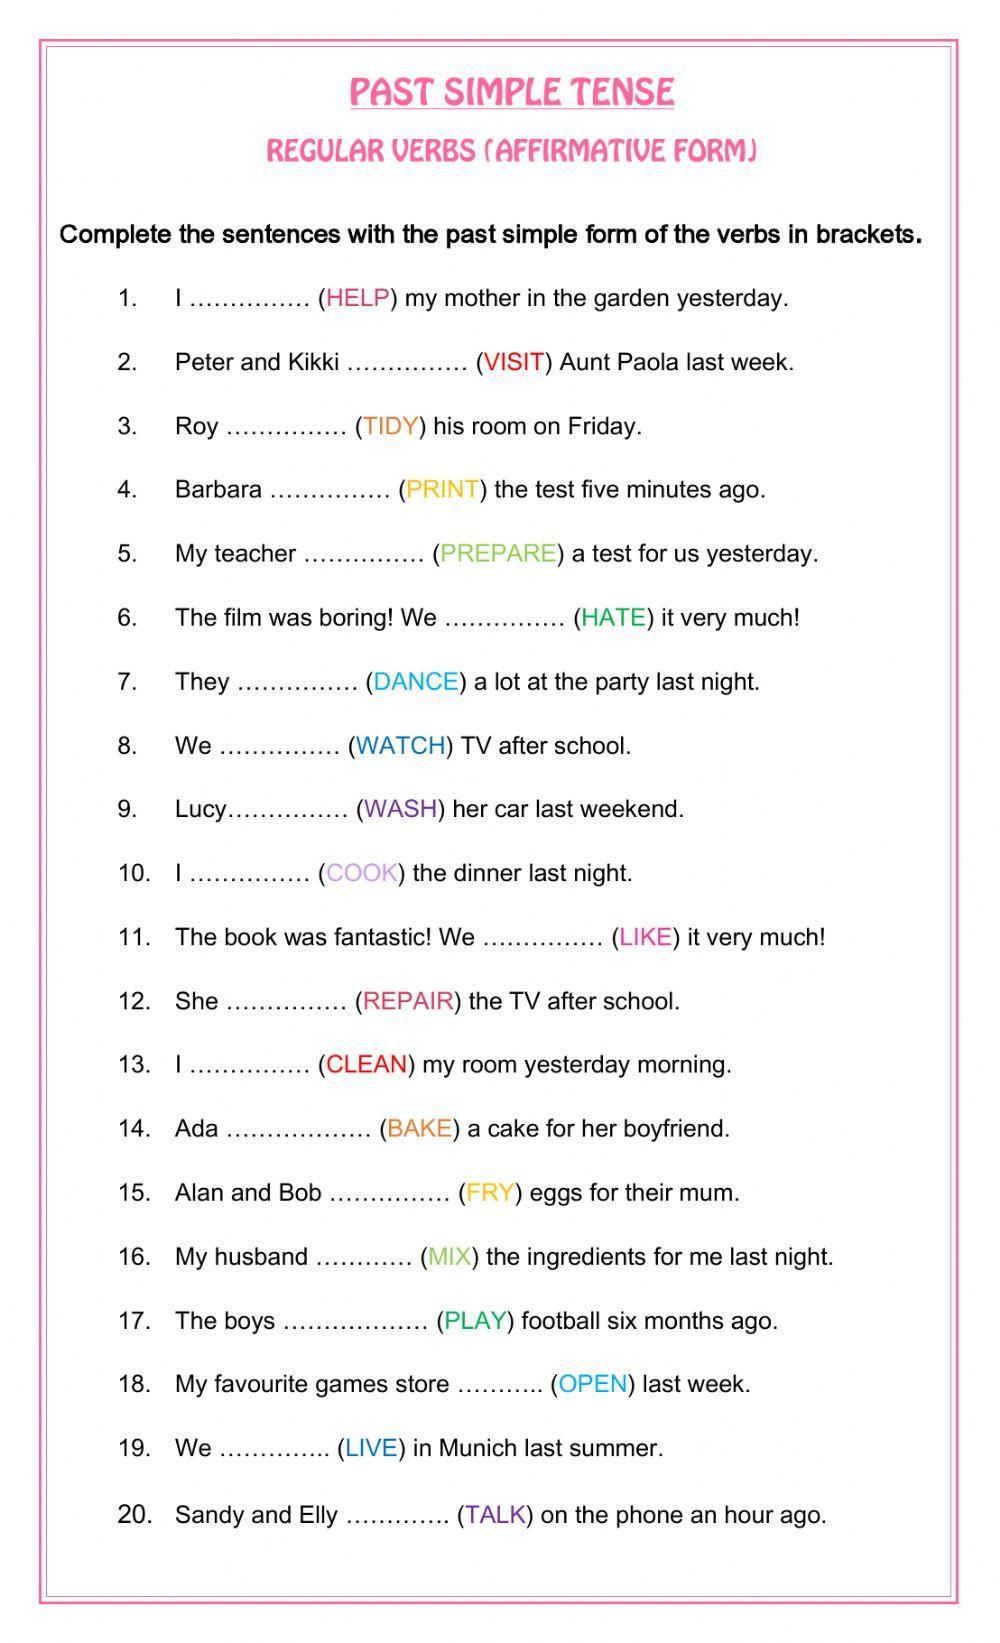 PAST SIMPLE TENSE - regular verbs (affirmative)